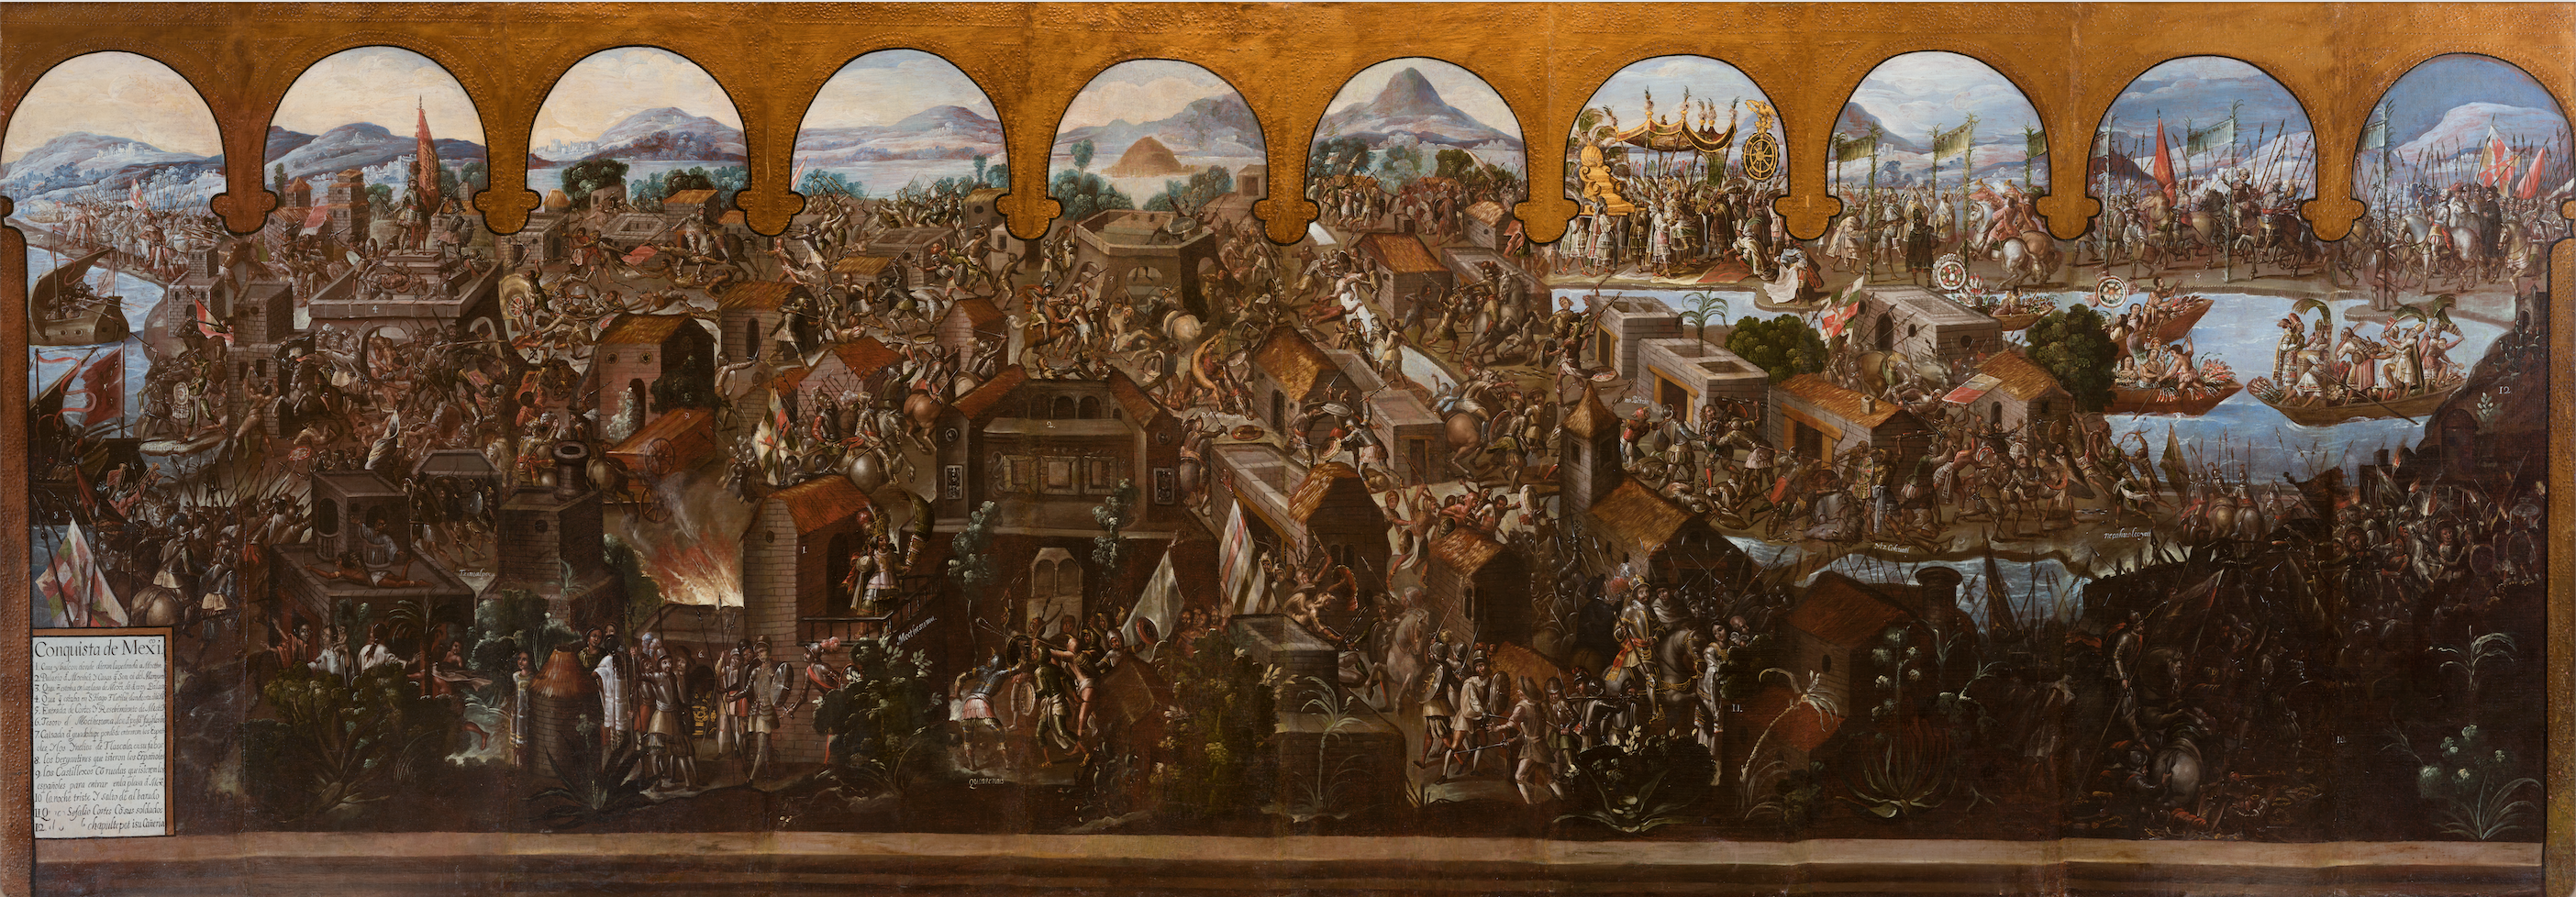 3.	Diego Correa (atrib.), La Conquista de México, ca. 1680, óleo sobre tela, 190.6 x 539 cm, Museo Nacional de Historia. Foto: Mad Pixel. D. R. Secretaría de Cultura. INAH.